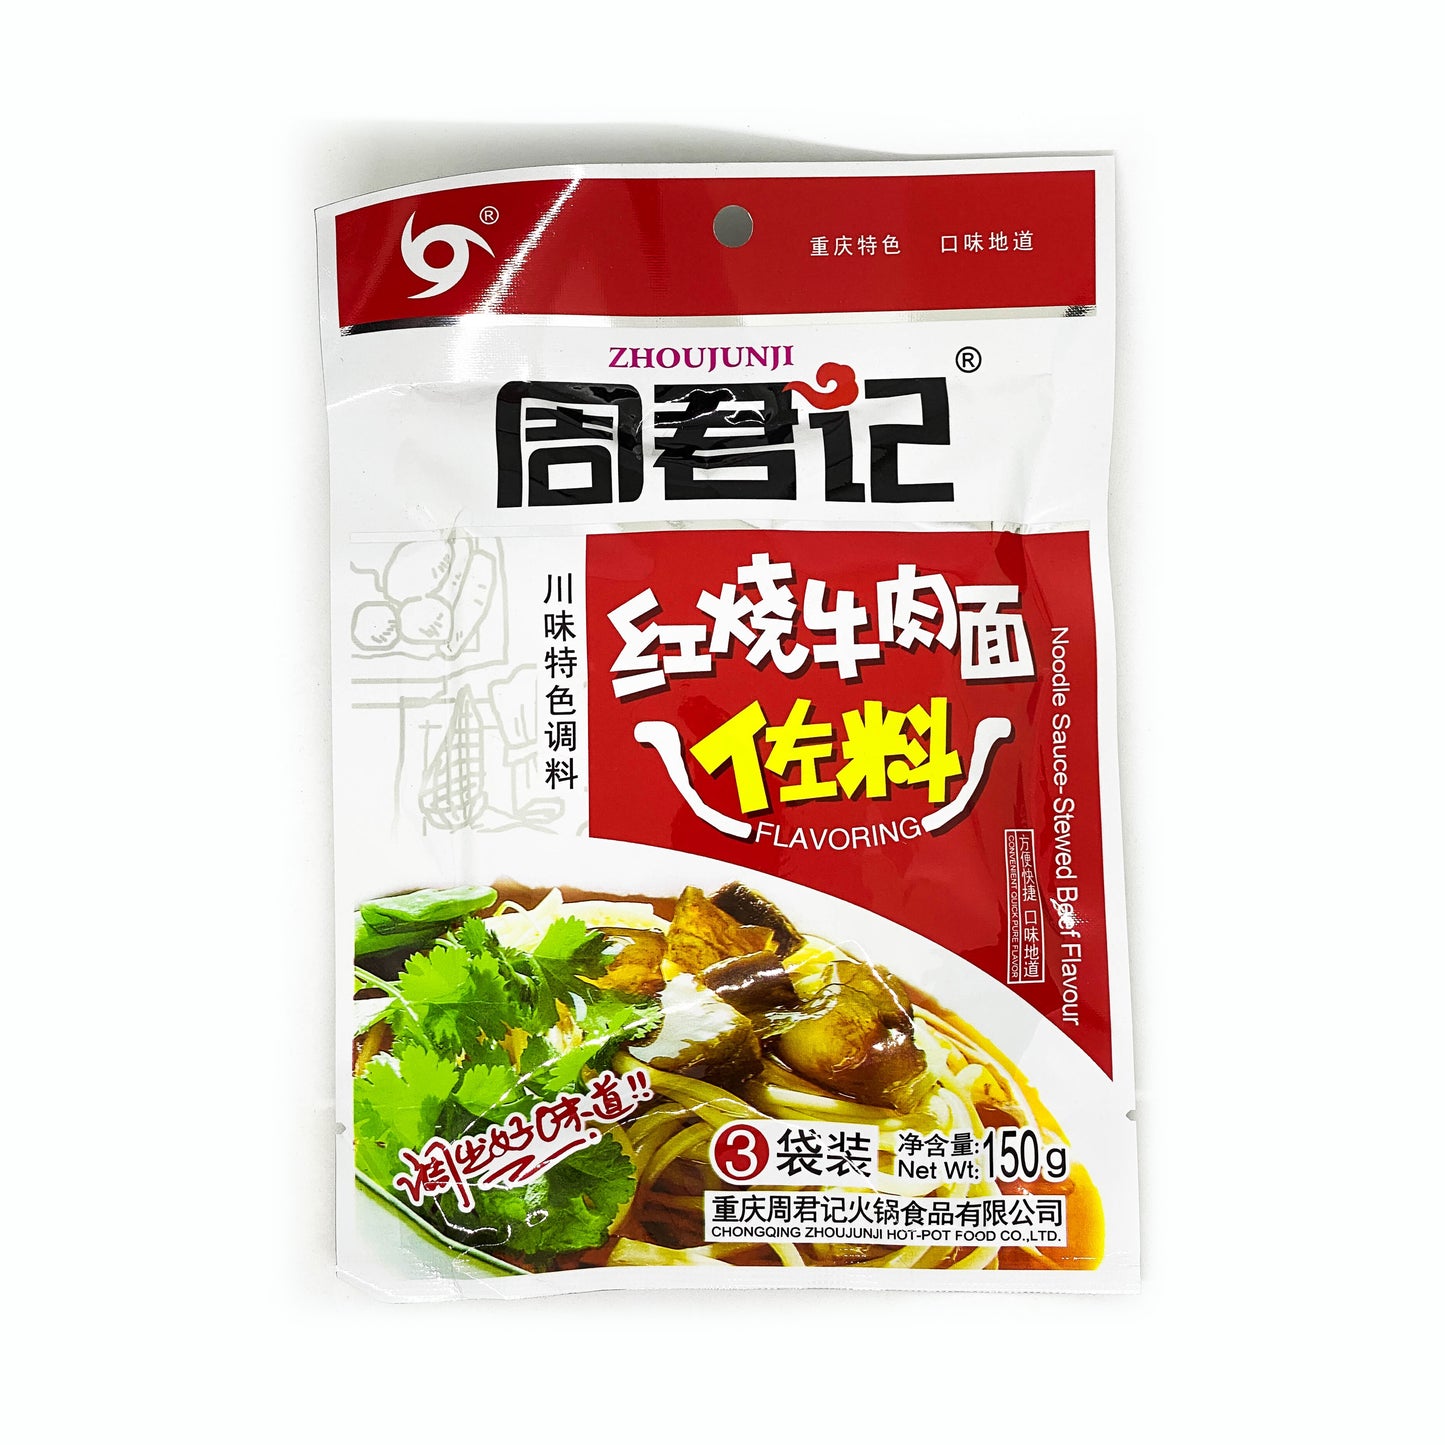 Noodle Sauce - Stewed Beef Flavor 周君記 紅燒牛肉麵佐料